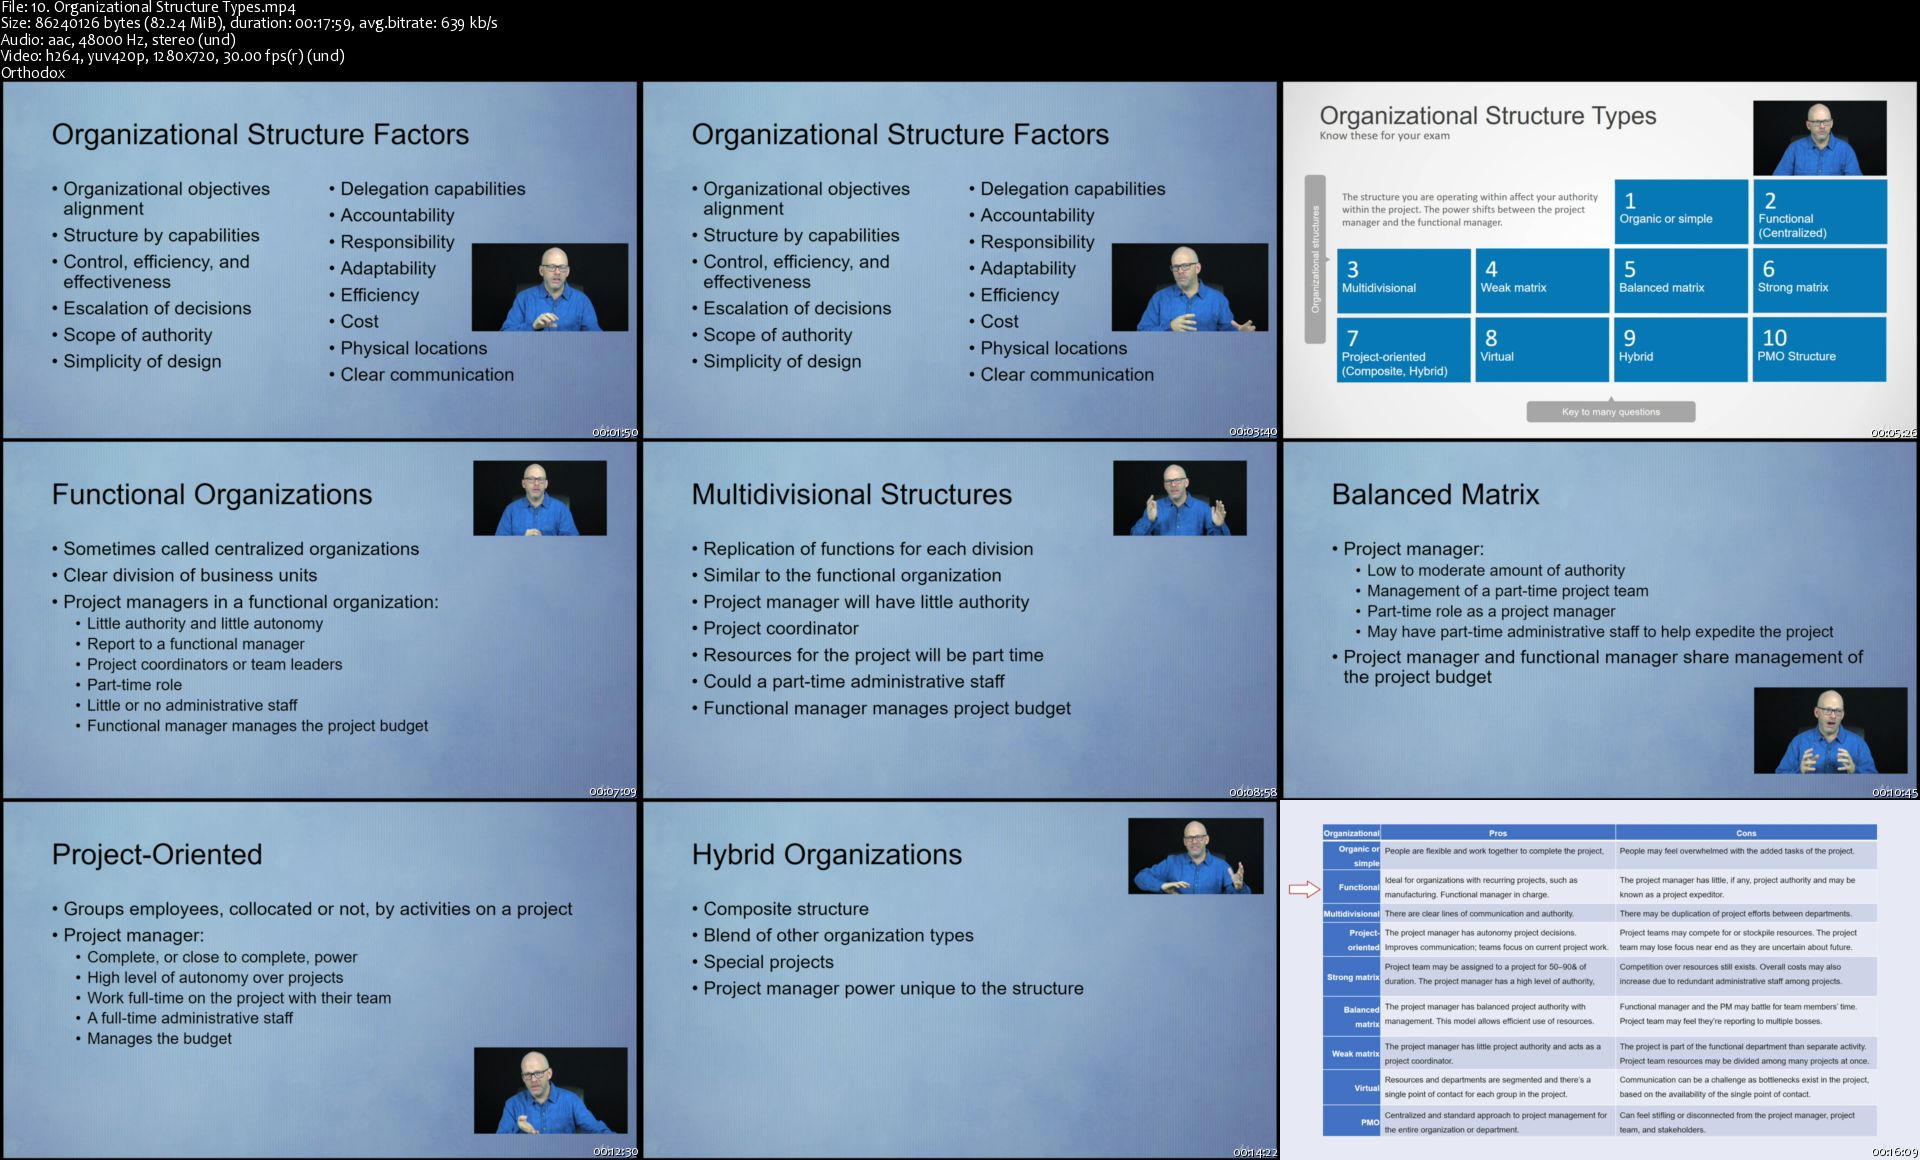 10-Organizational-Structure-Types-s.jpg